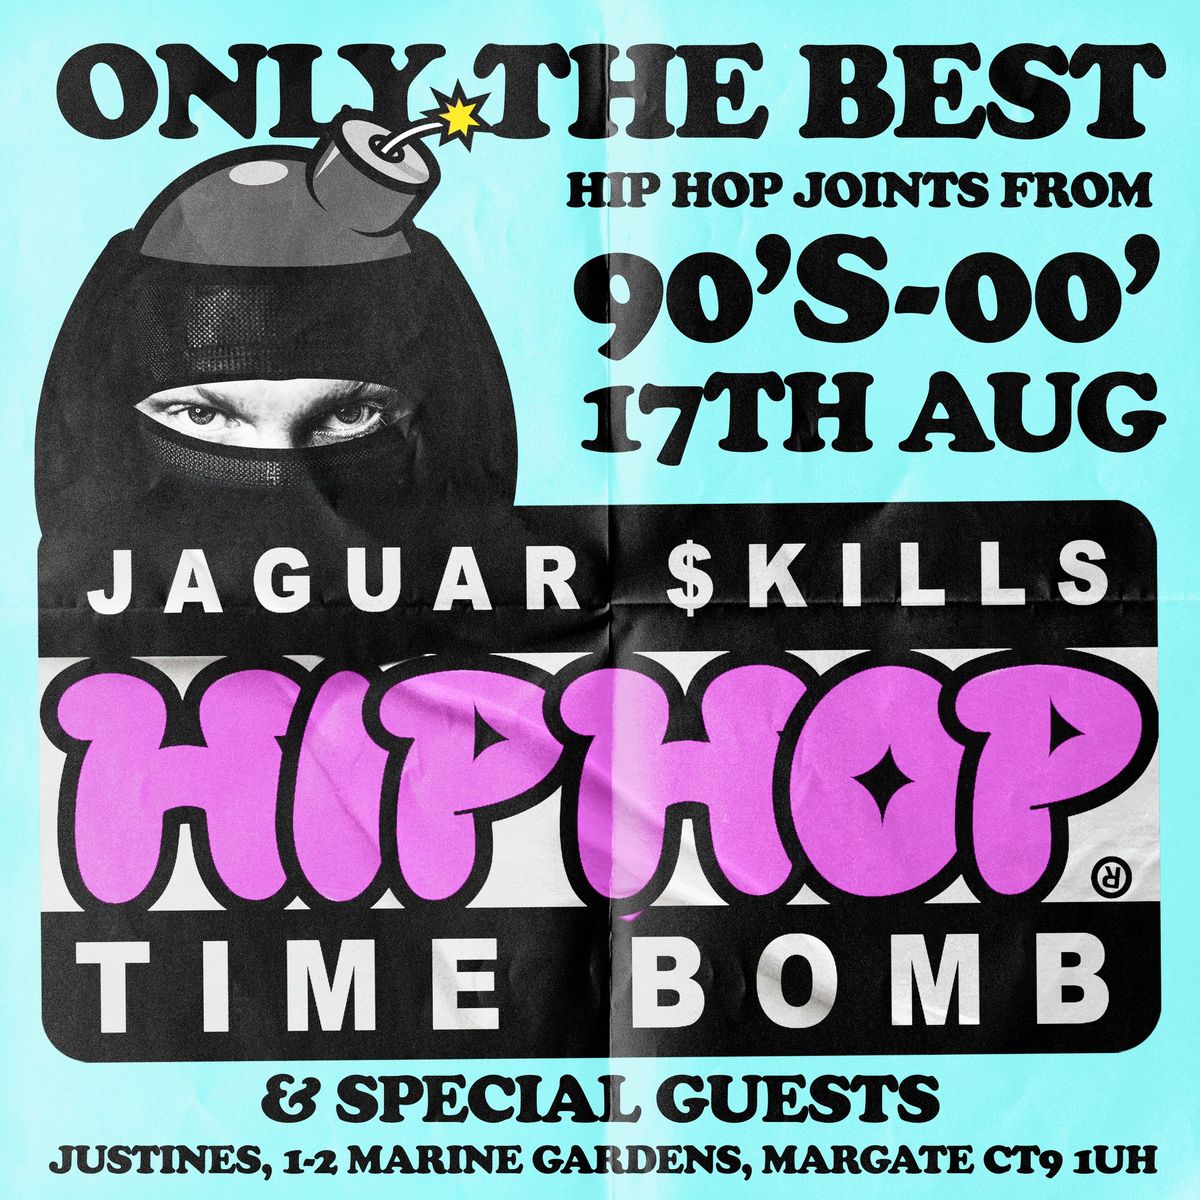 Jaguar Skills Hip-Hop Time Bomb!